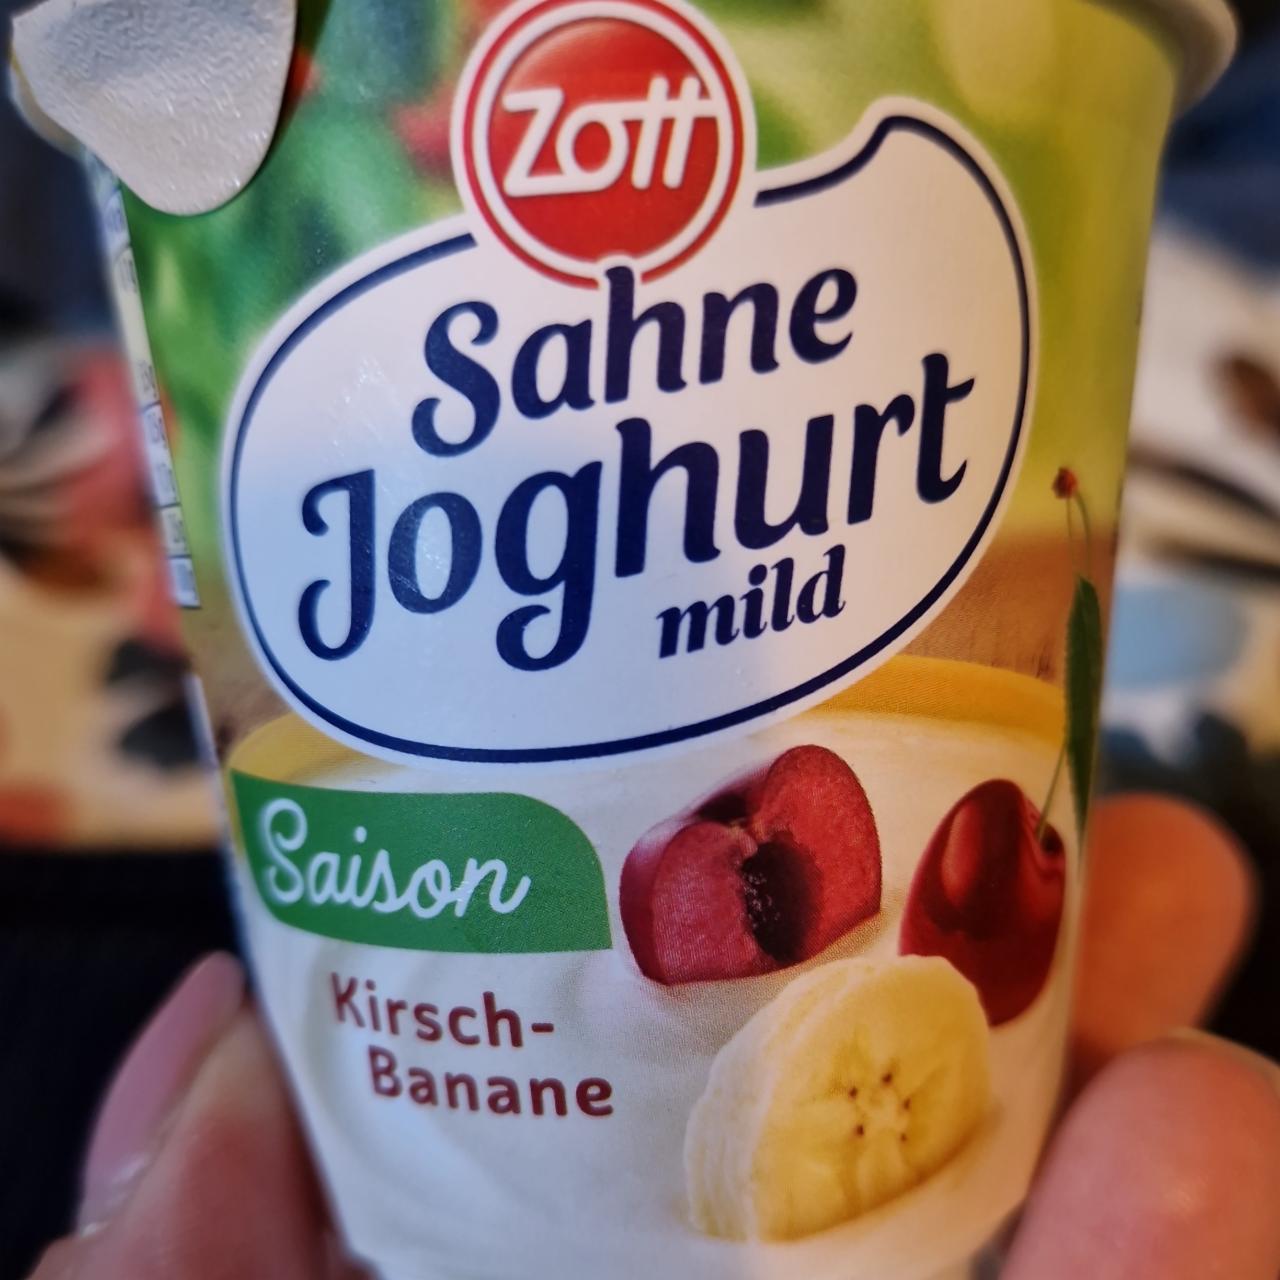 Képek - Sahne joghurt mild Kirsch-banane Zott